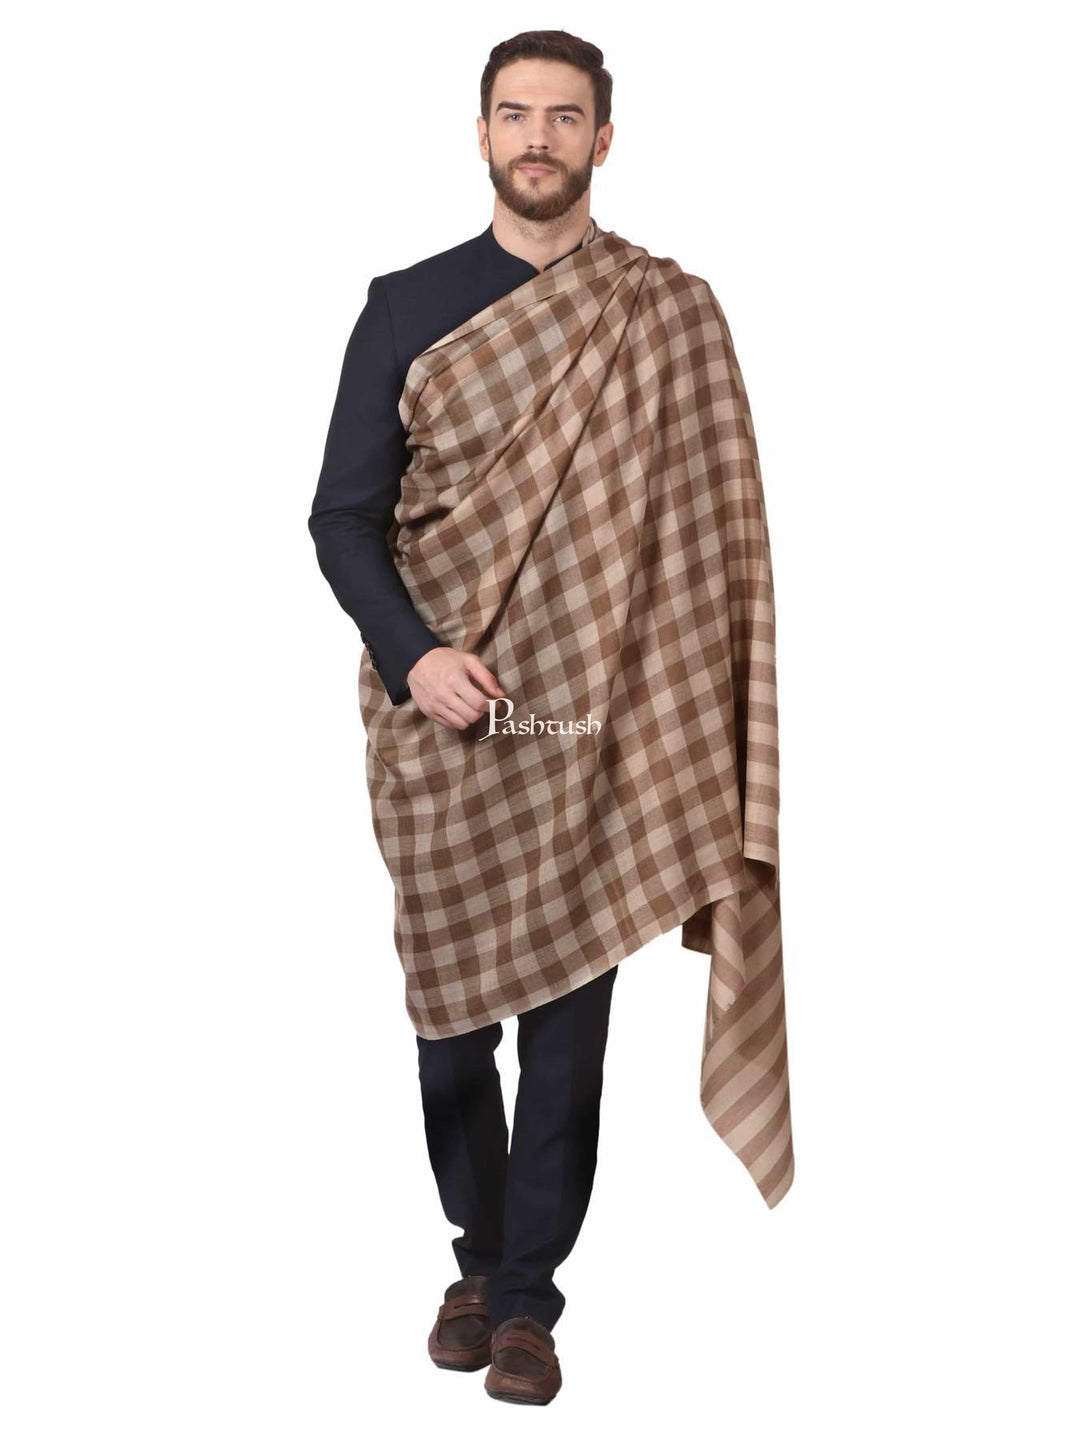 Pashtush India Mens Shawls Gents Shawl Pashtush Mens Check Shawl, Extra Fine Merino Wool, Warm, Soft And Light Weight